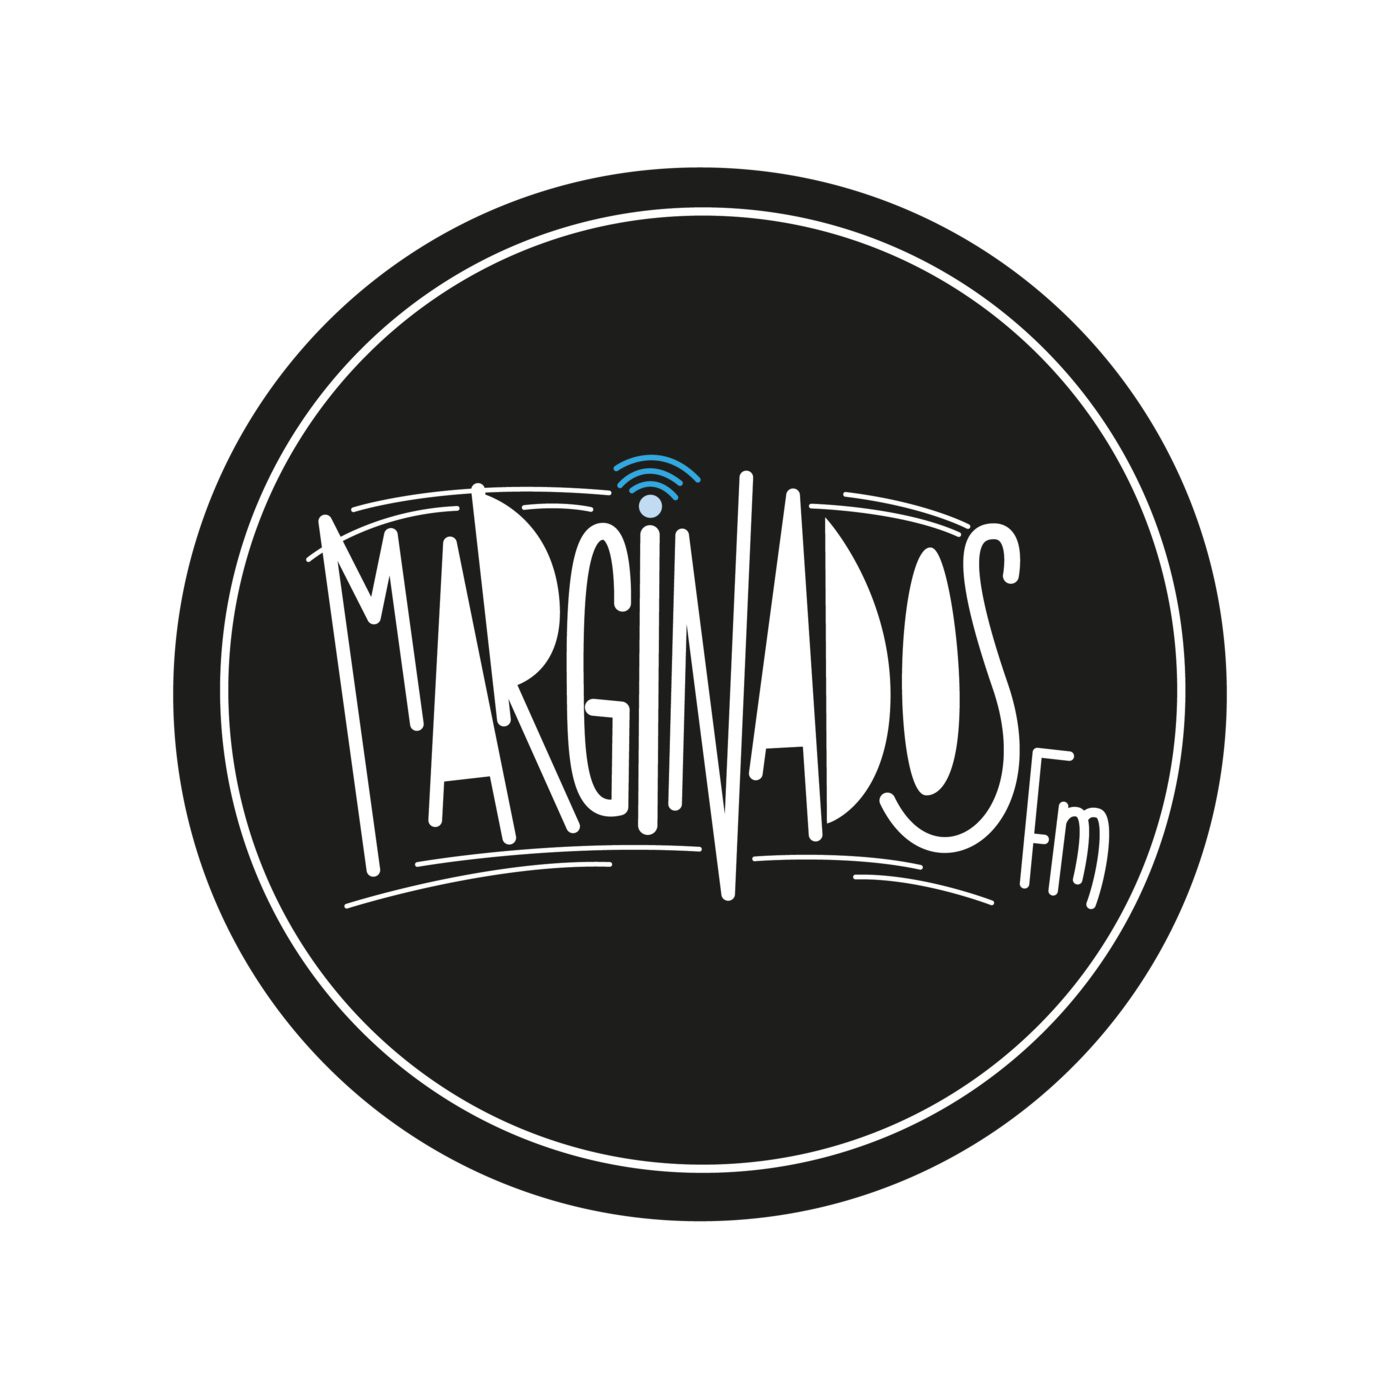 Marginados fm 11-08-14